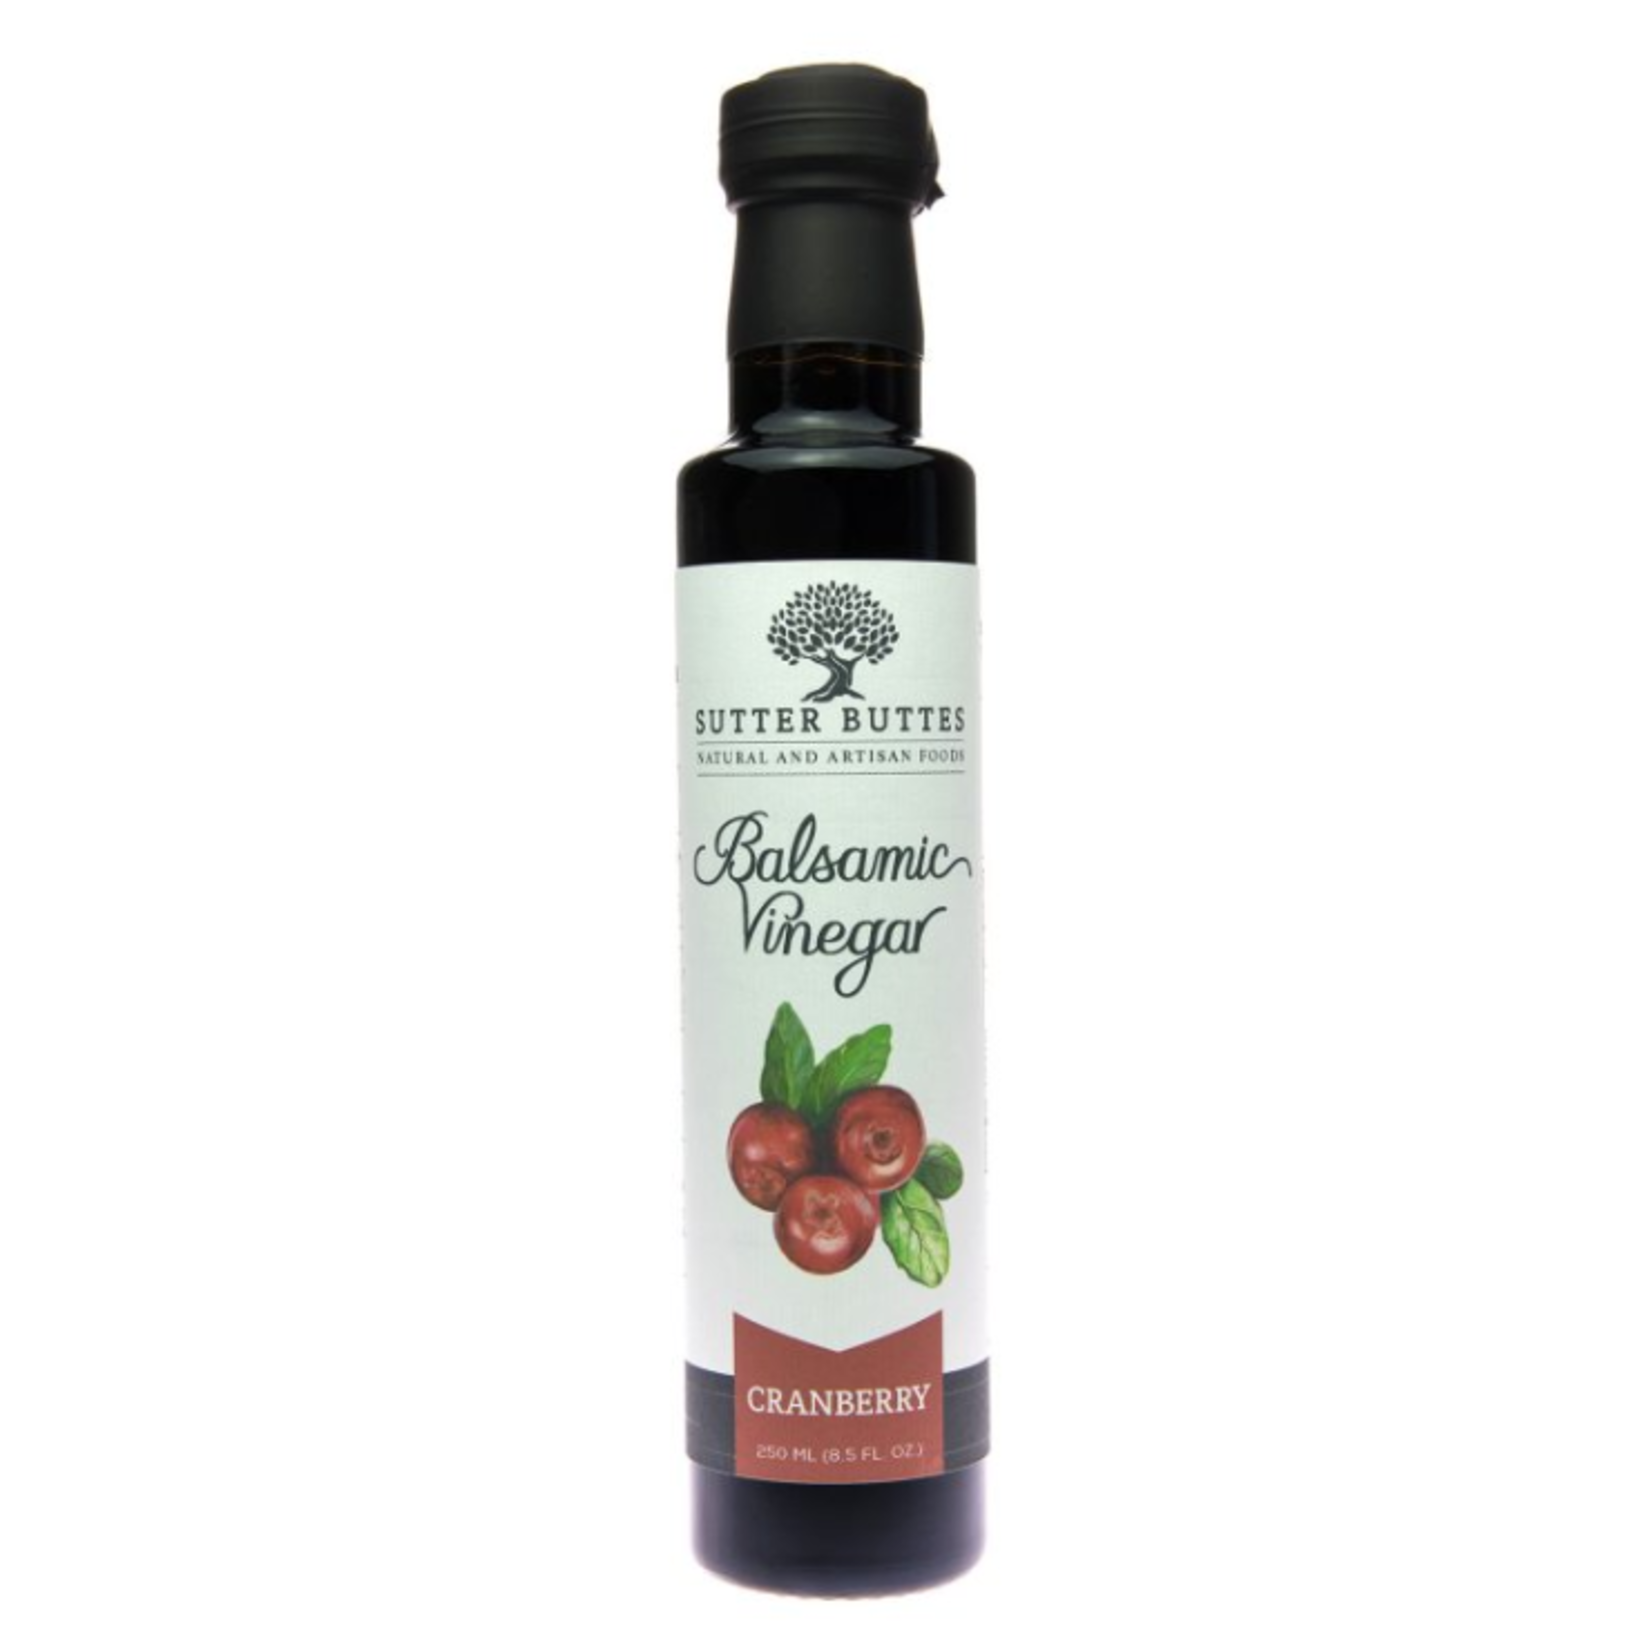 Sutter Buttes Cranberry - Fruit Fusion Dark Balsamic Vinegar, 250 ml